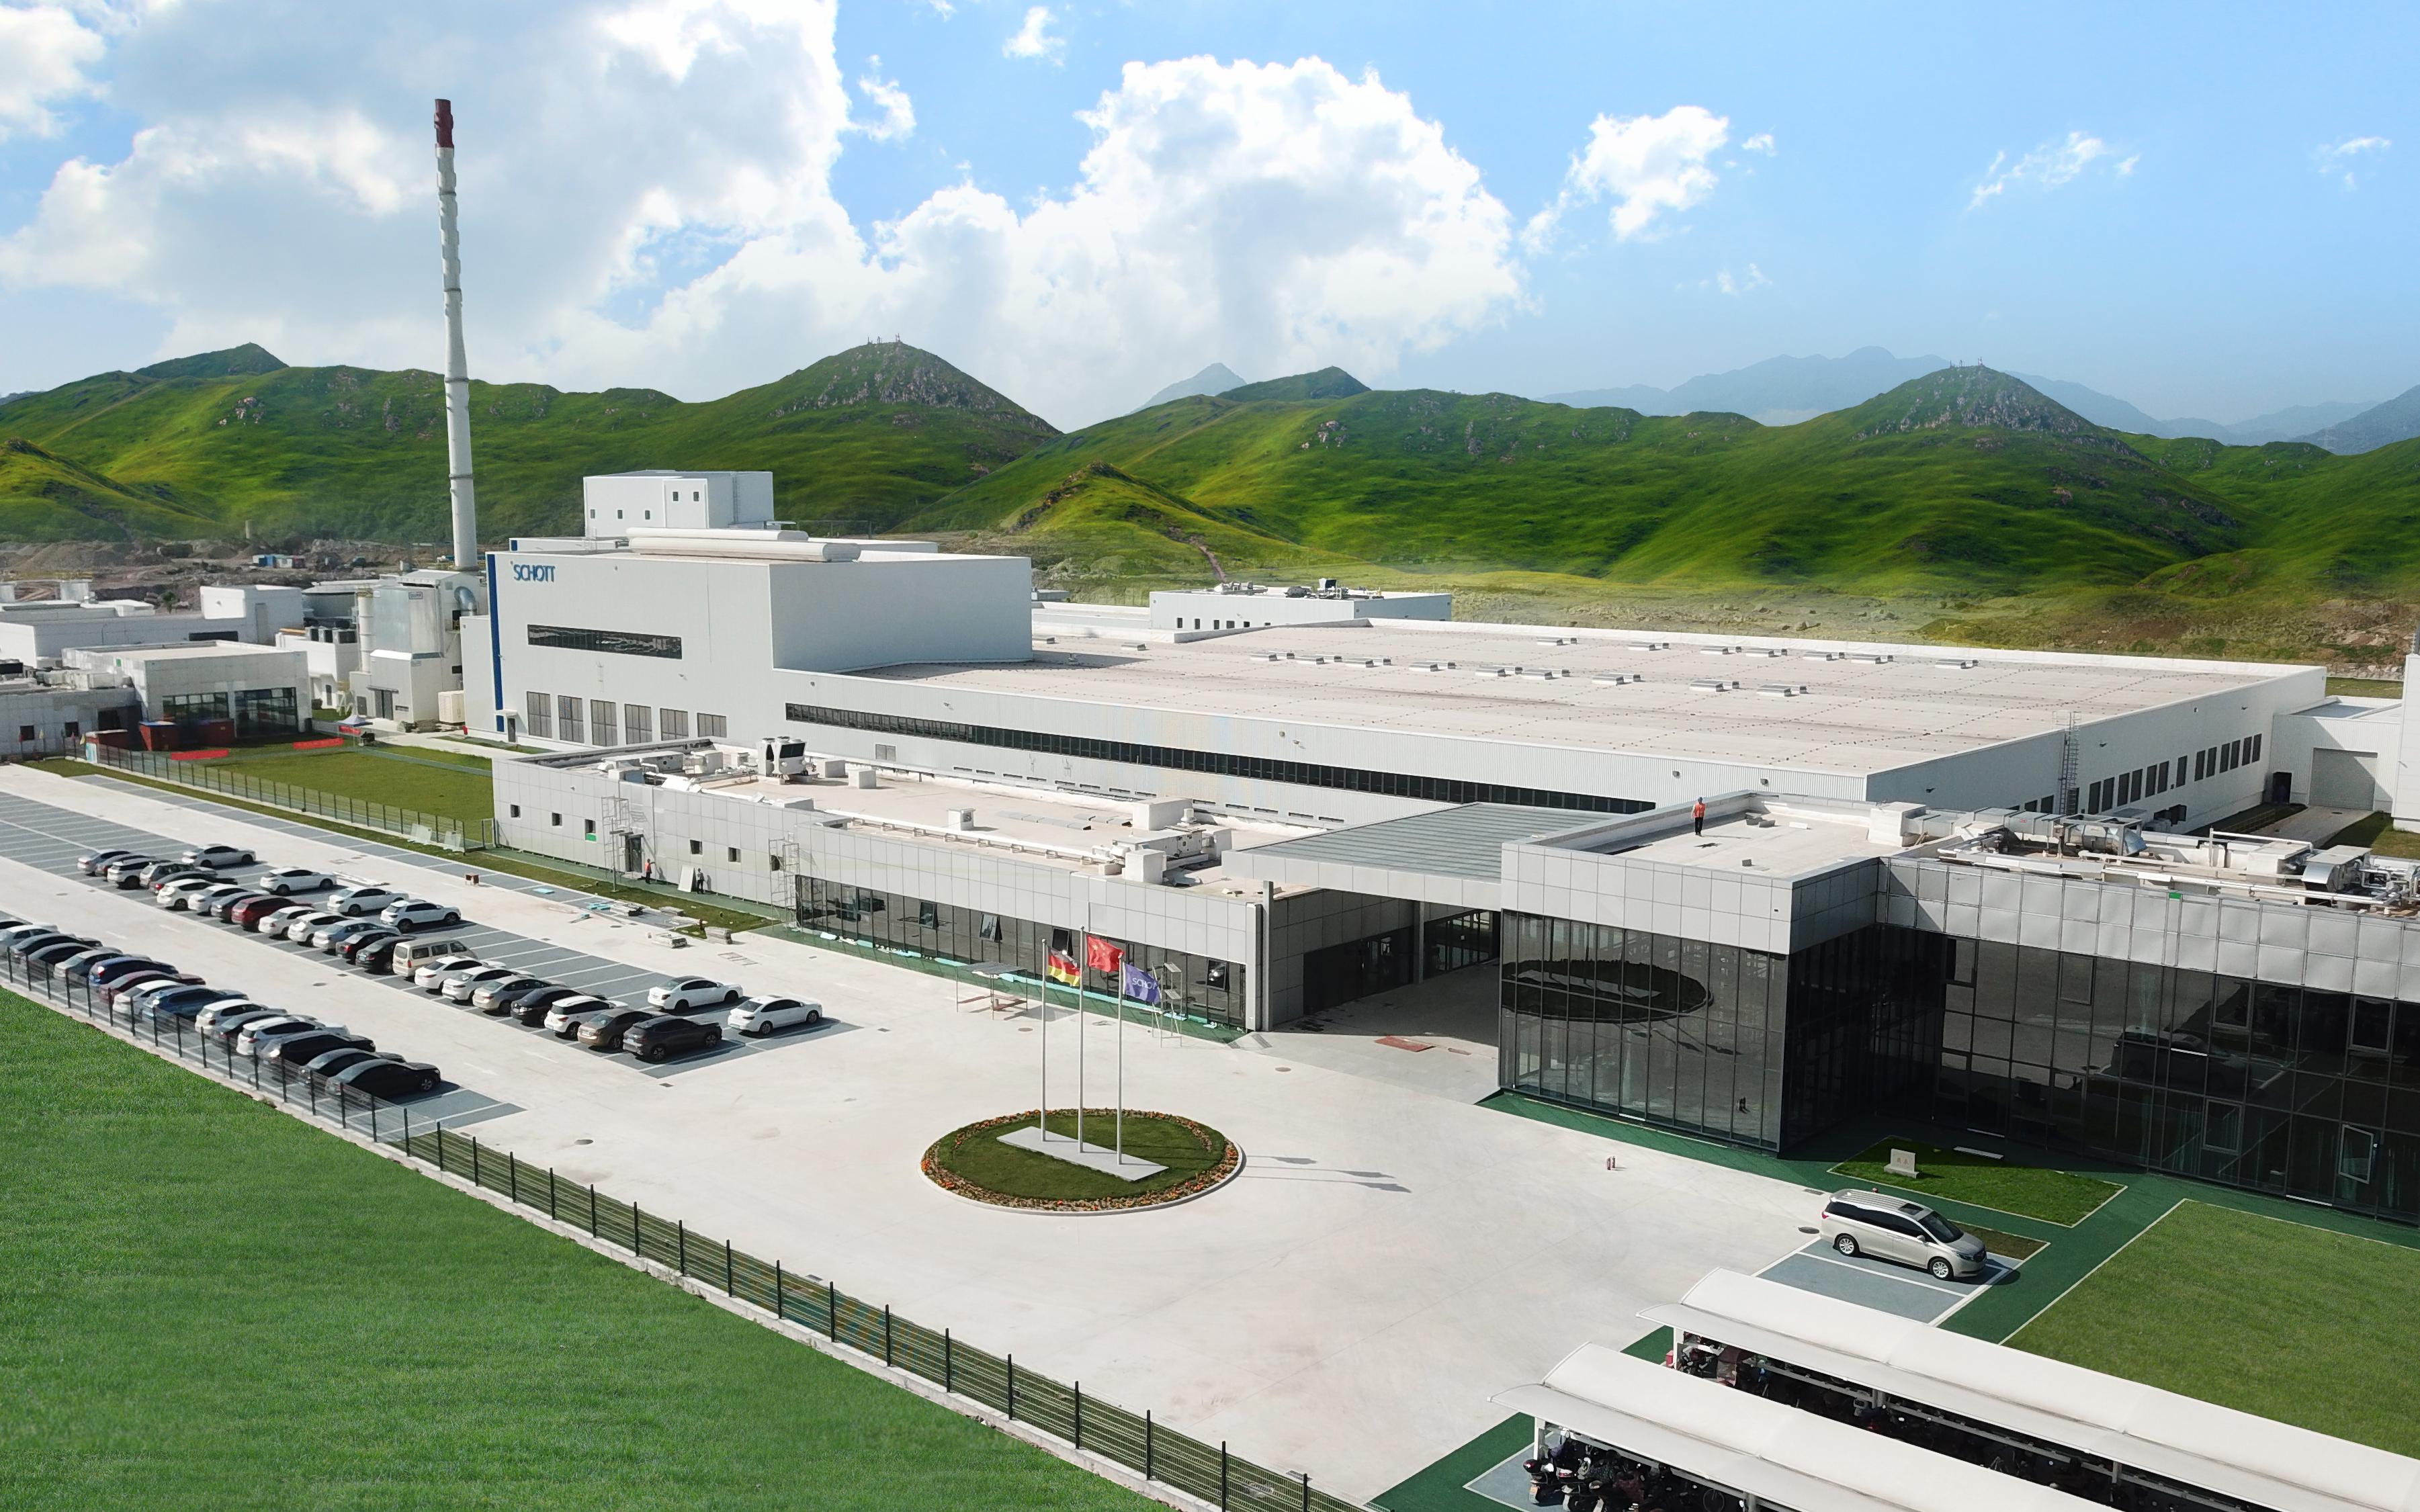 Aerial shot of the SCHOTT Tubing plant in Jinyun, China